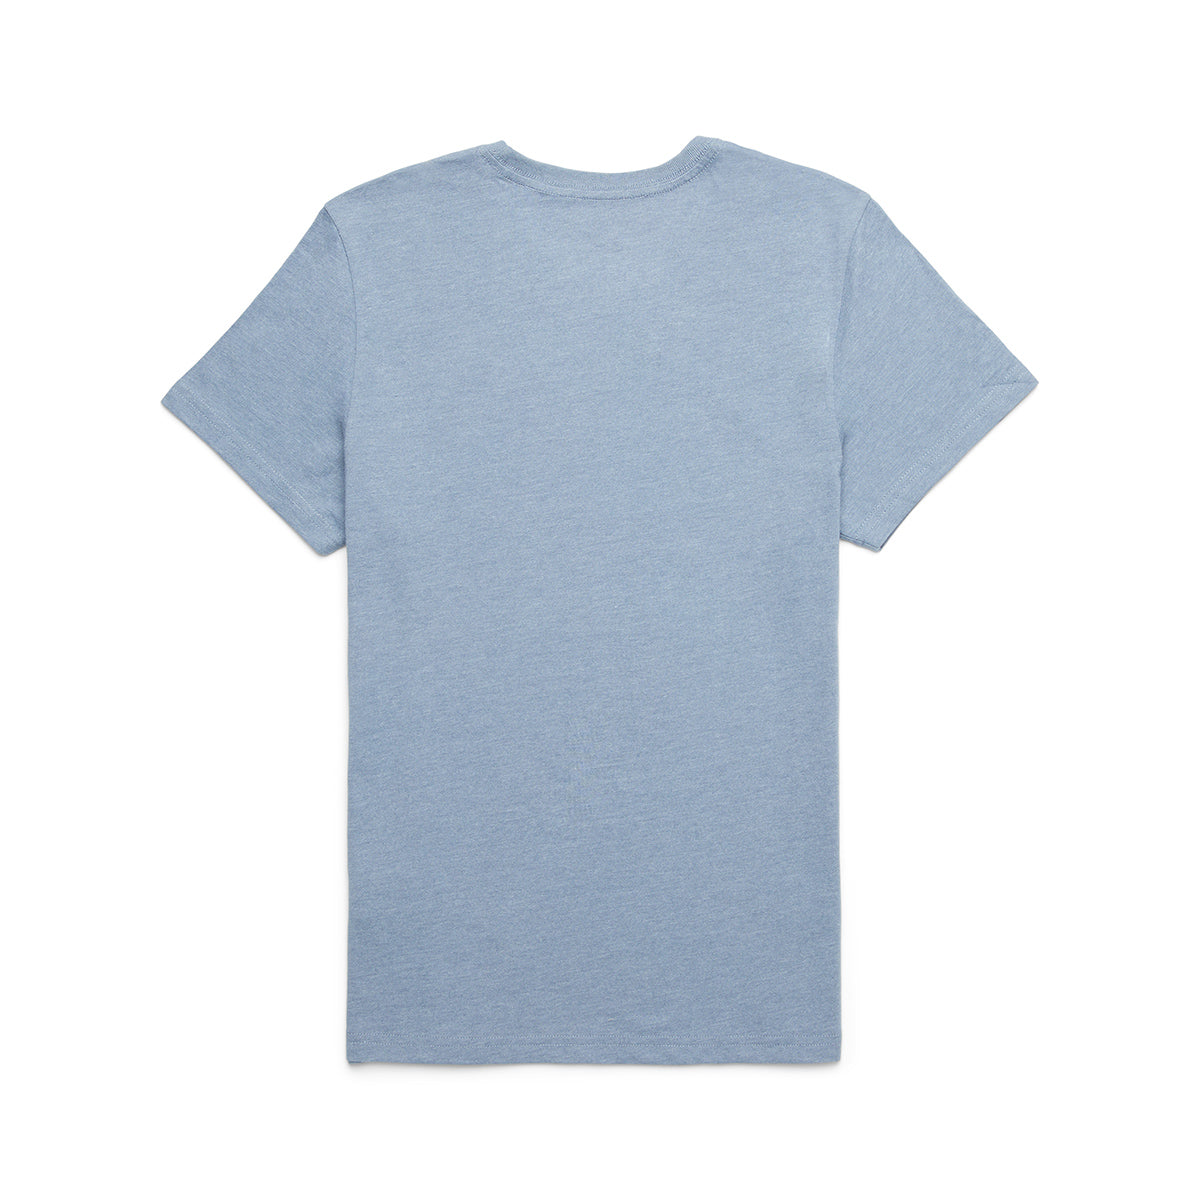 Cotopaxi Sunrise T-Shirt - WOMENS サンライズ ティーシャツ レディース